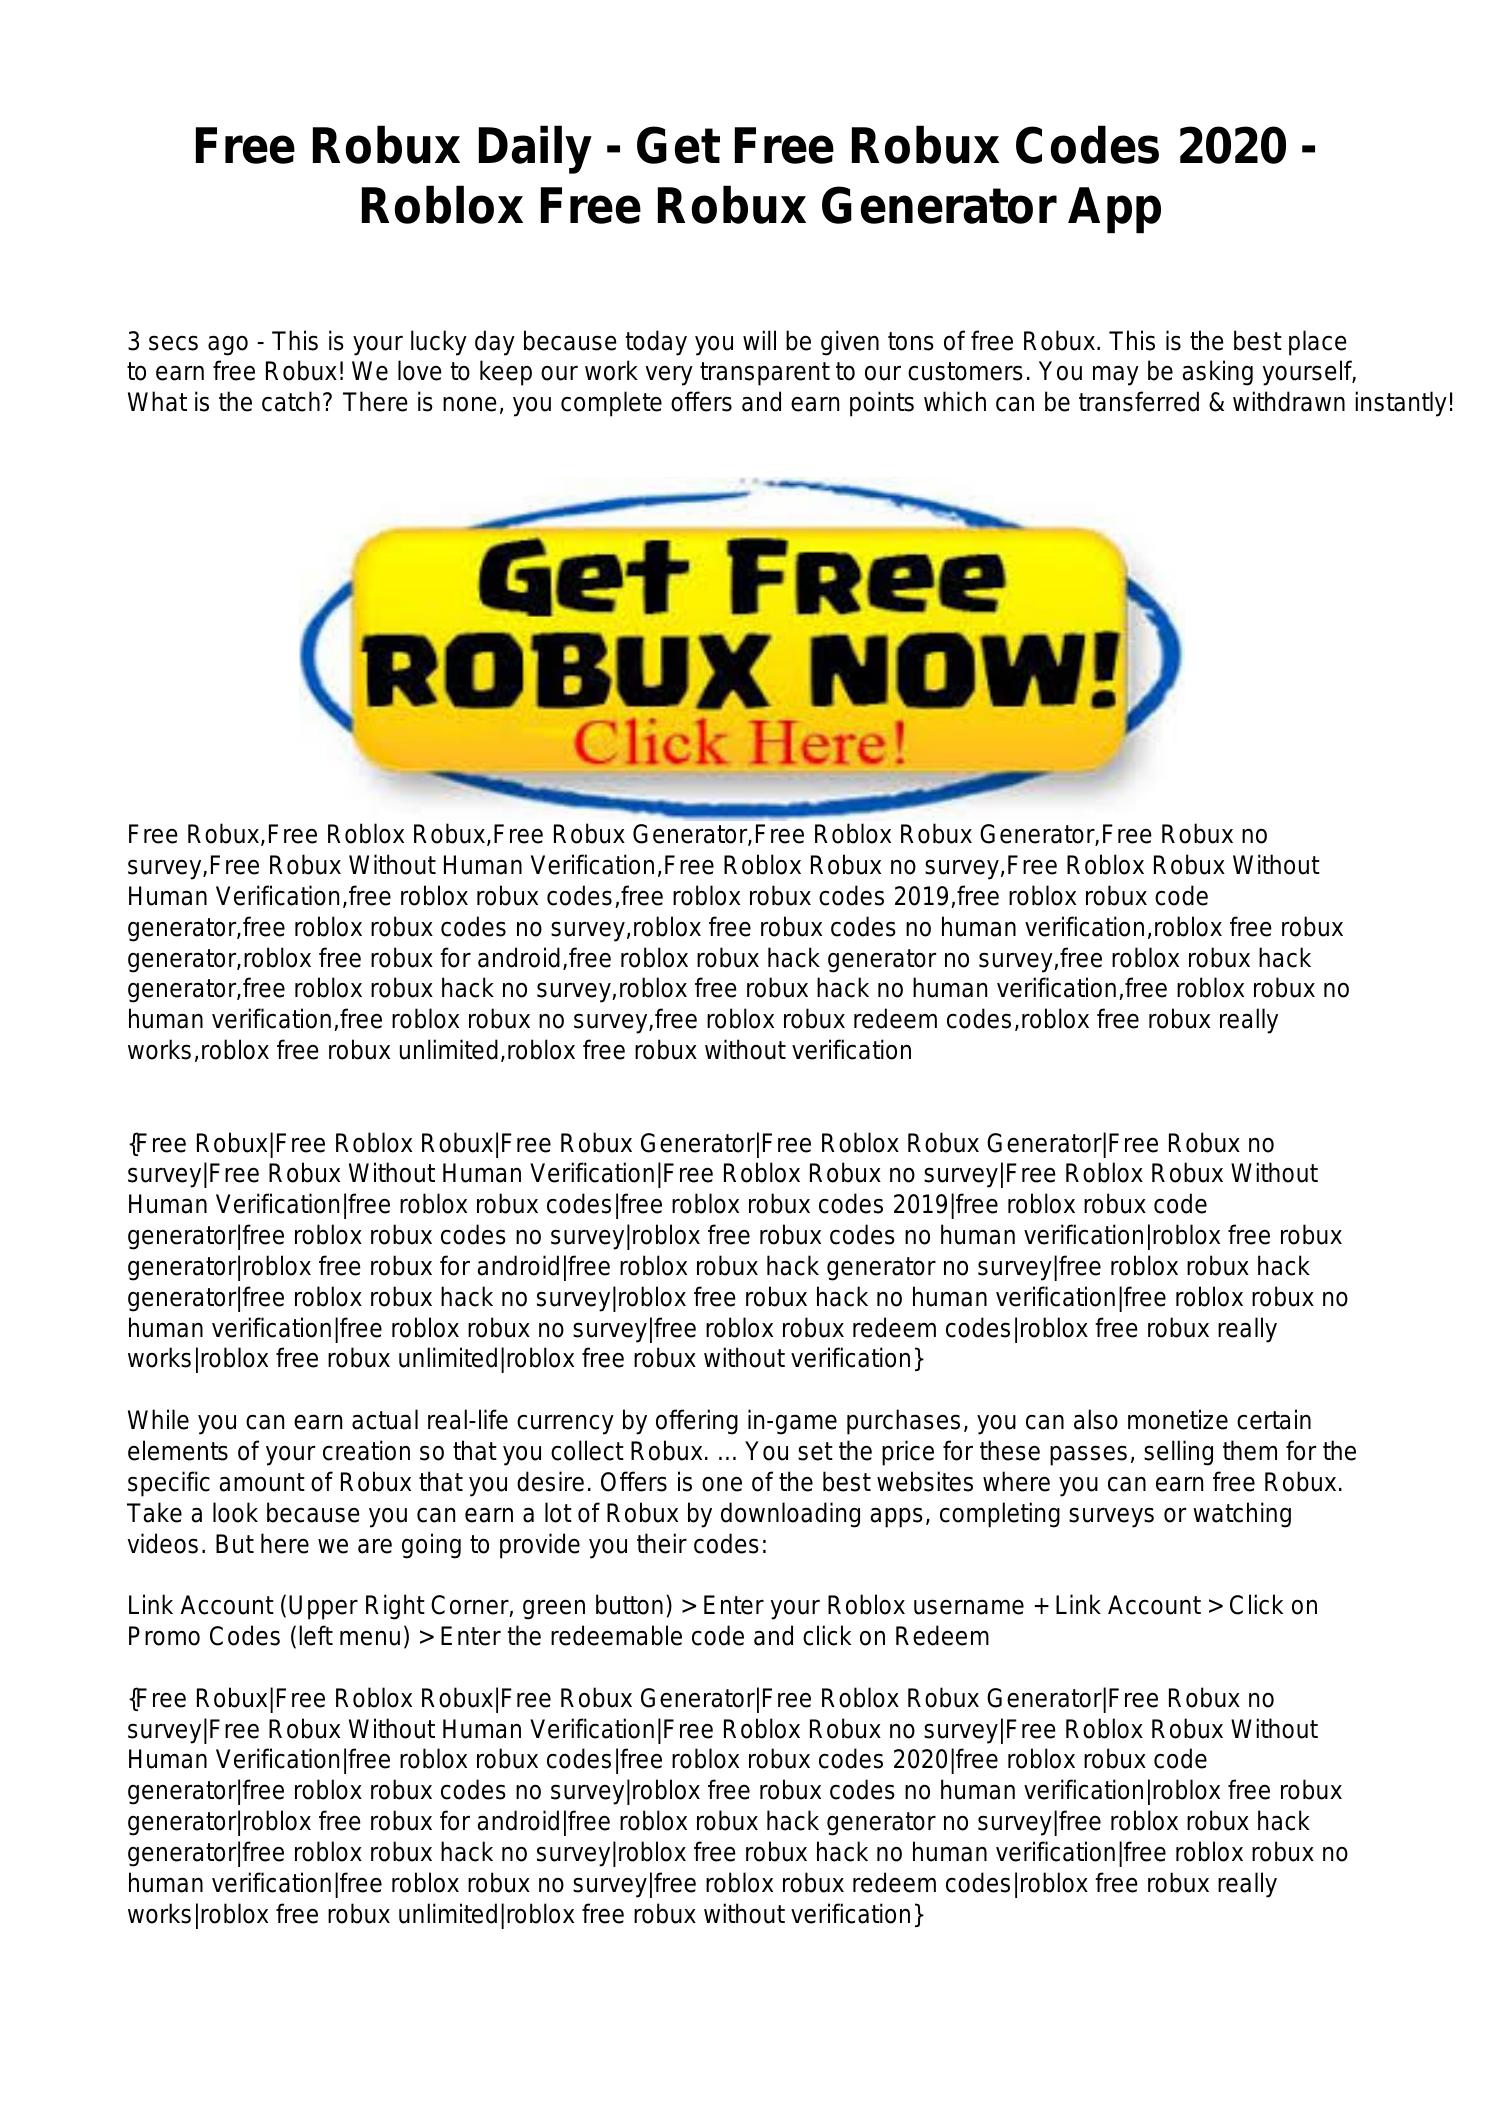 Get Free Robux Codes Generator